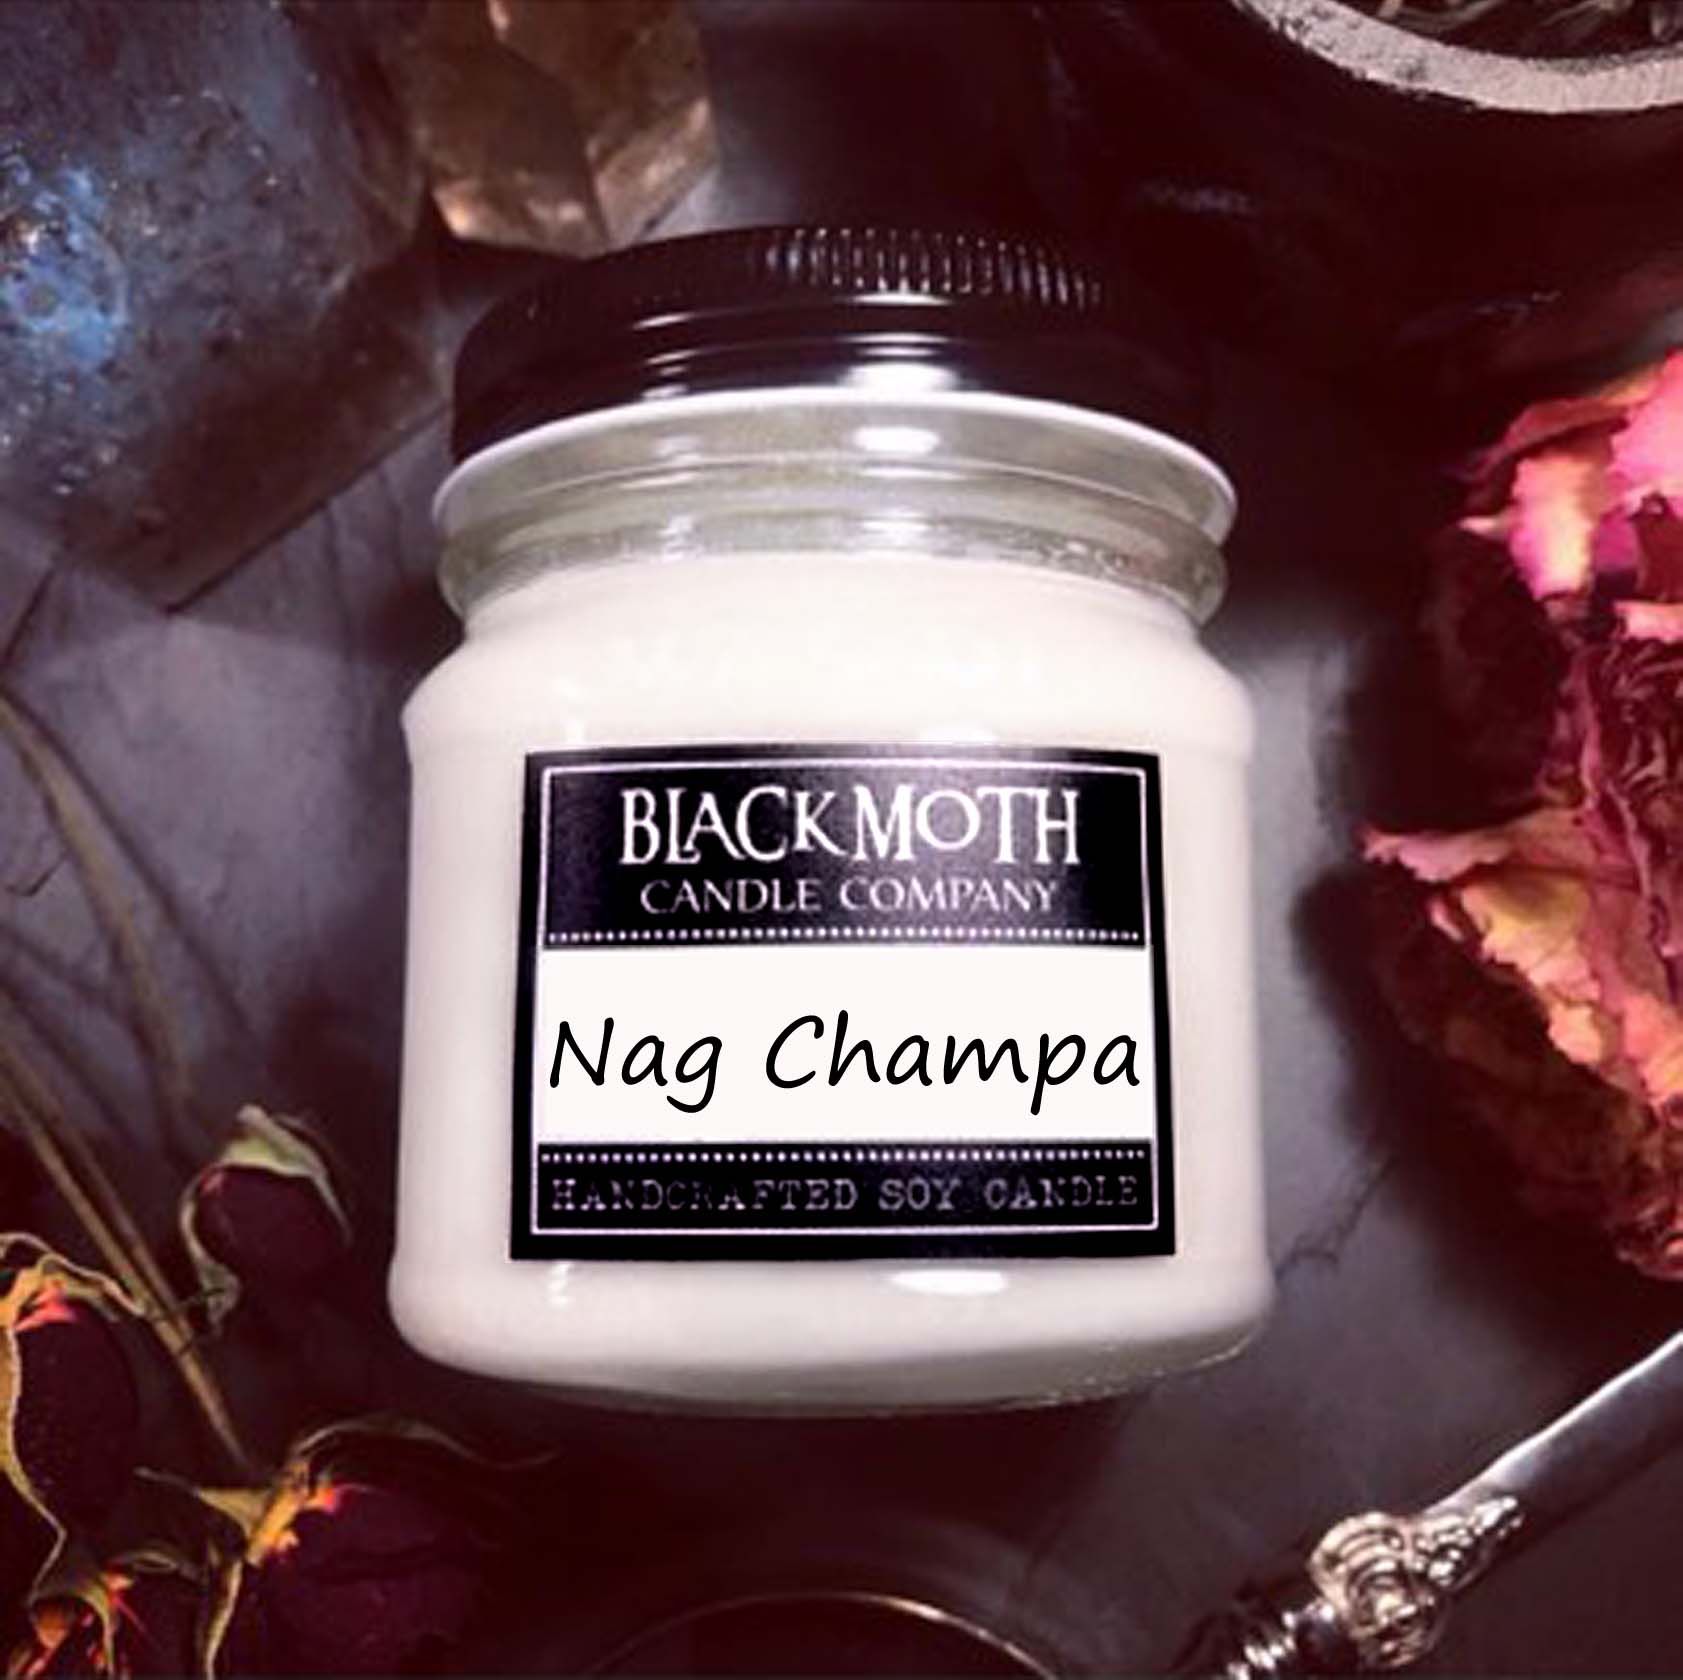 8 oz Nag Champa Scented Soy Candle in Mason Jar